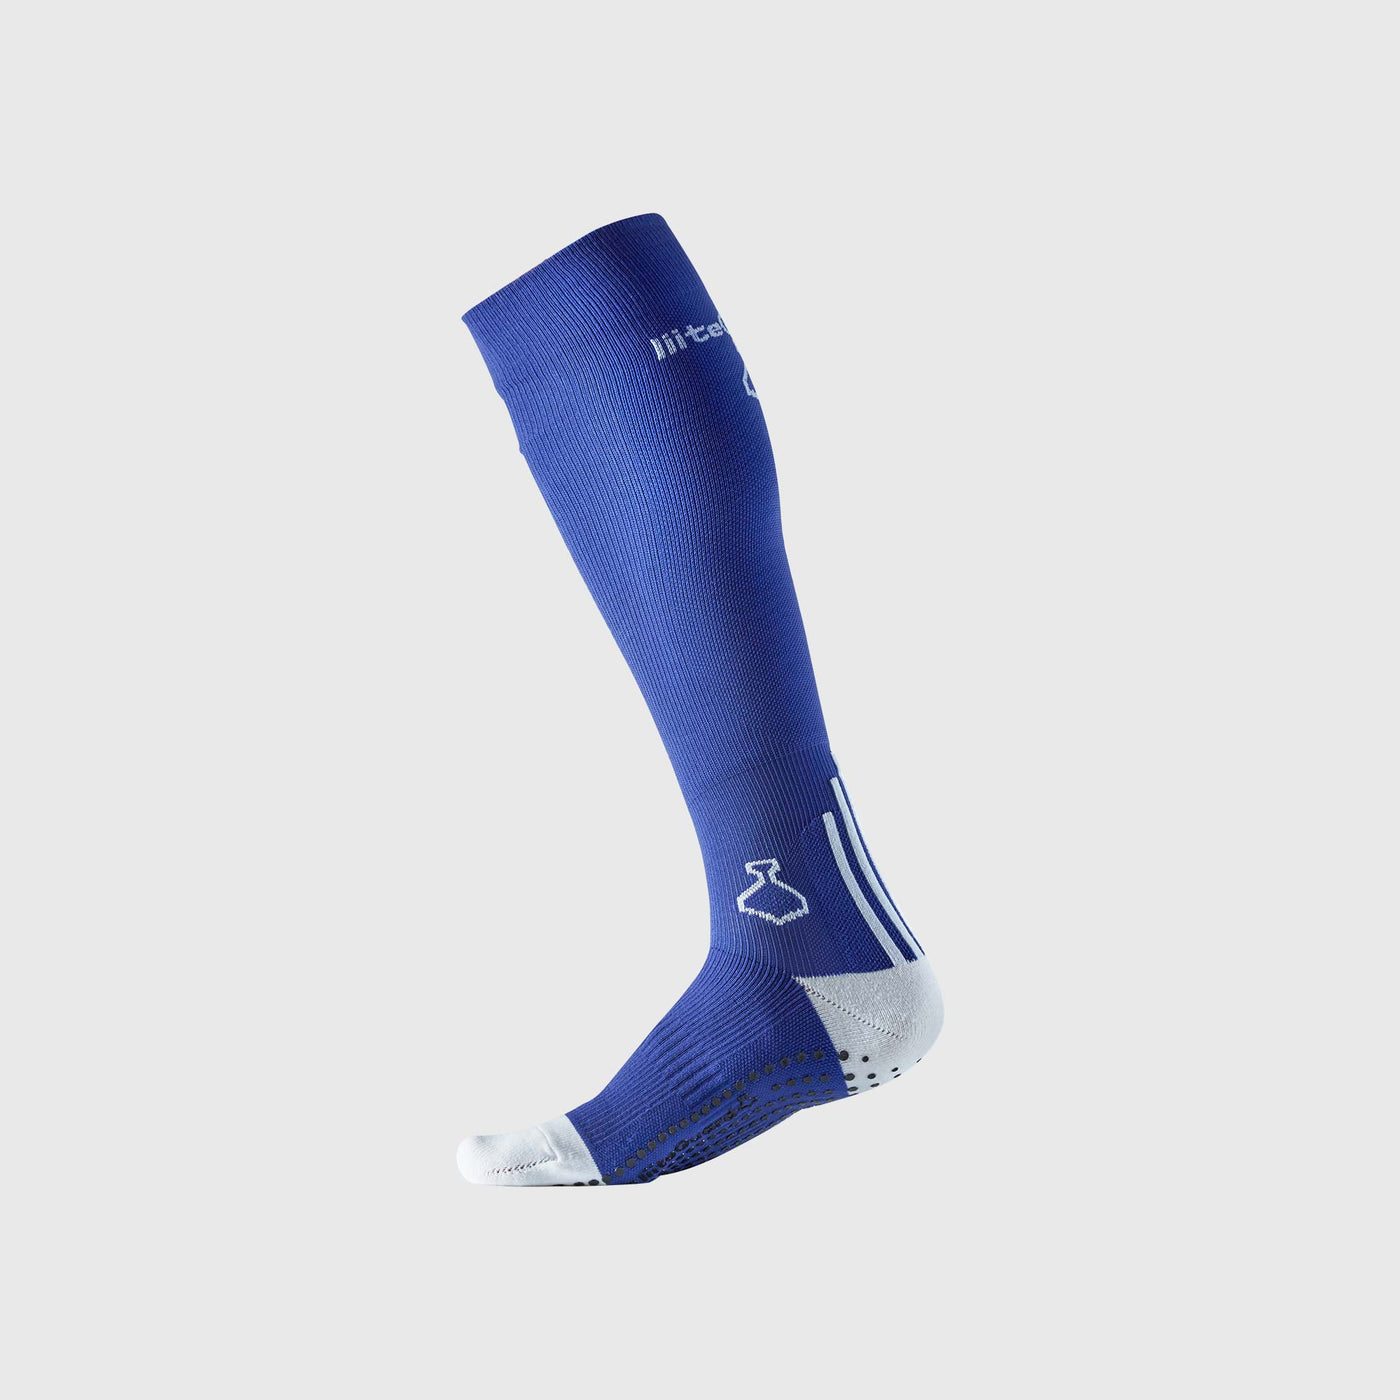 Liiteguard PERFORMANCE SOCK Long socks BLUE